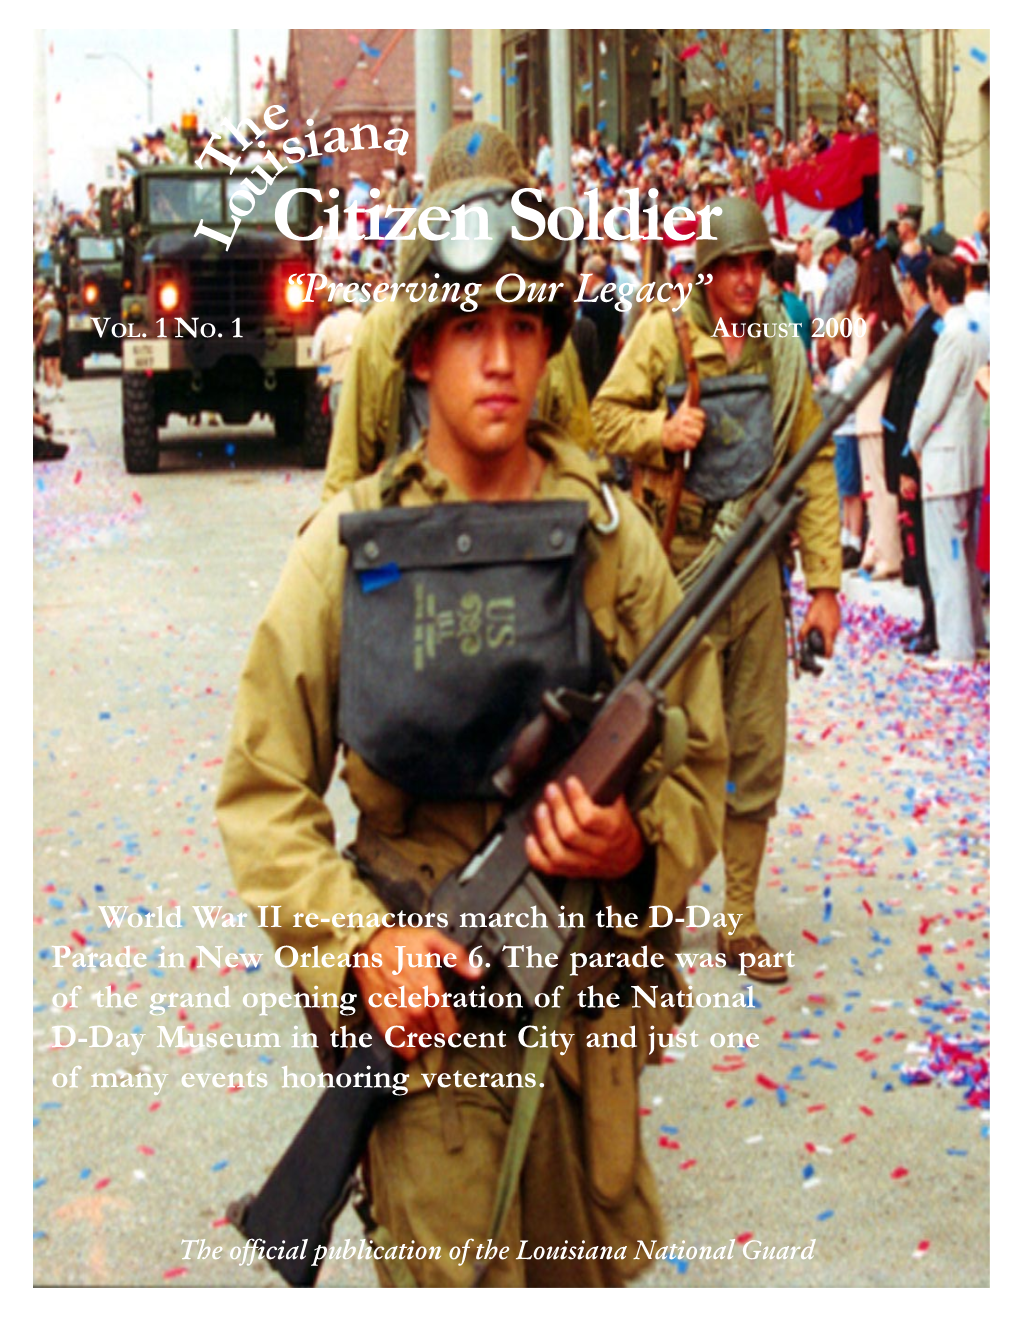 Citizen Soldier “Preserving Our Legacy” VOL